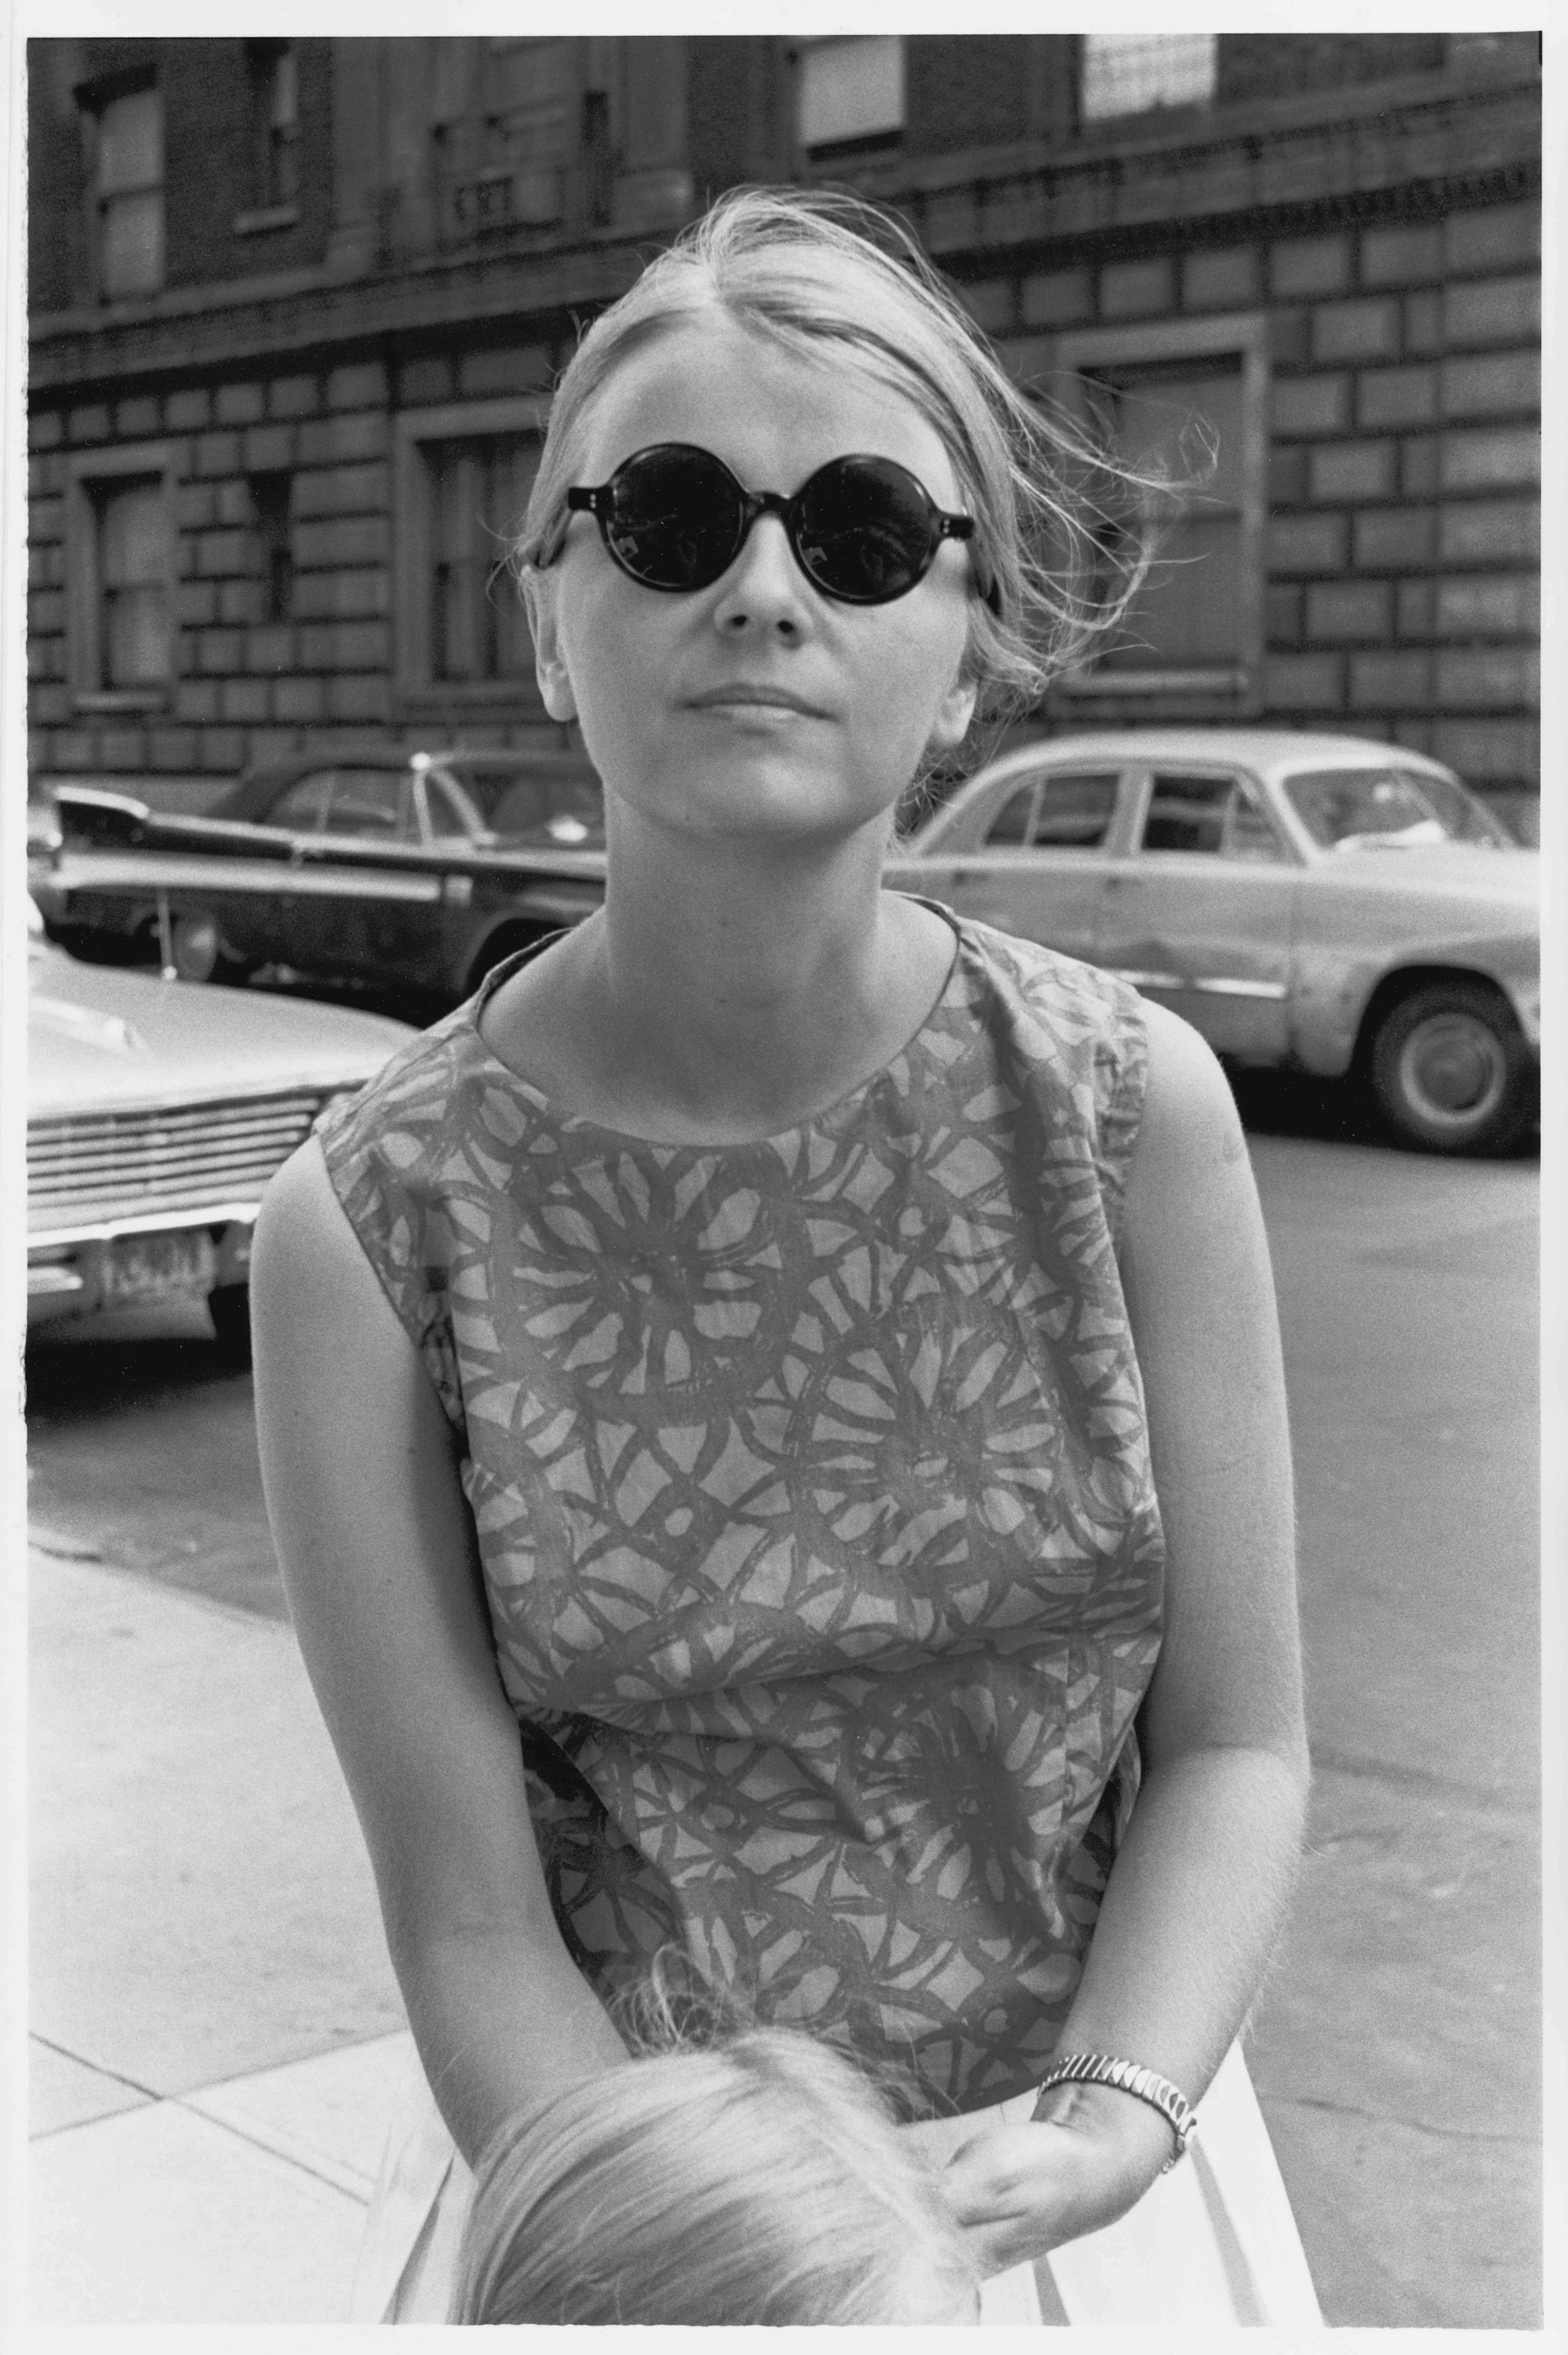 Monika in sunglasses, 1963